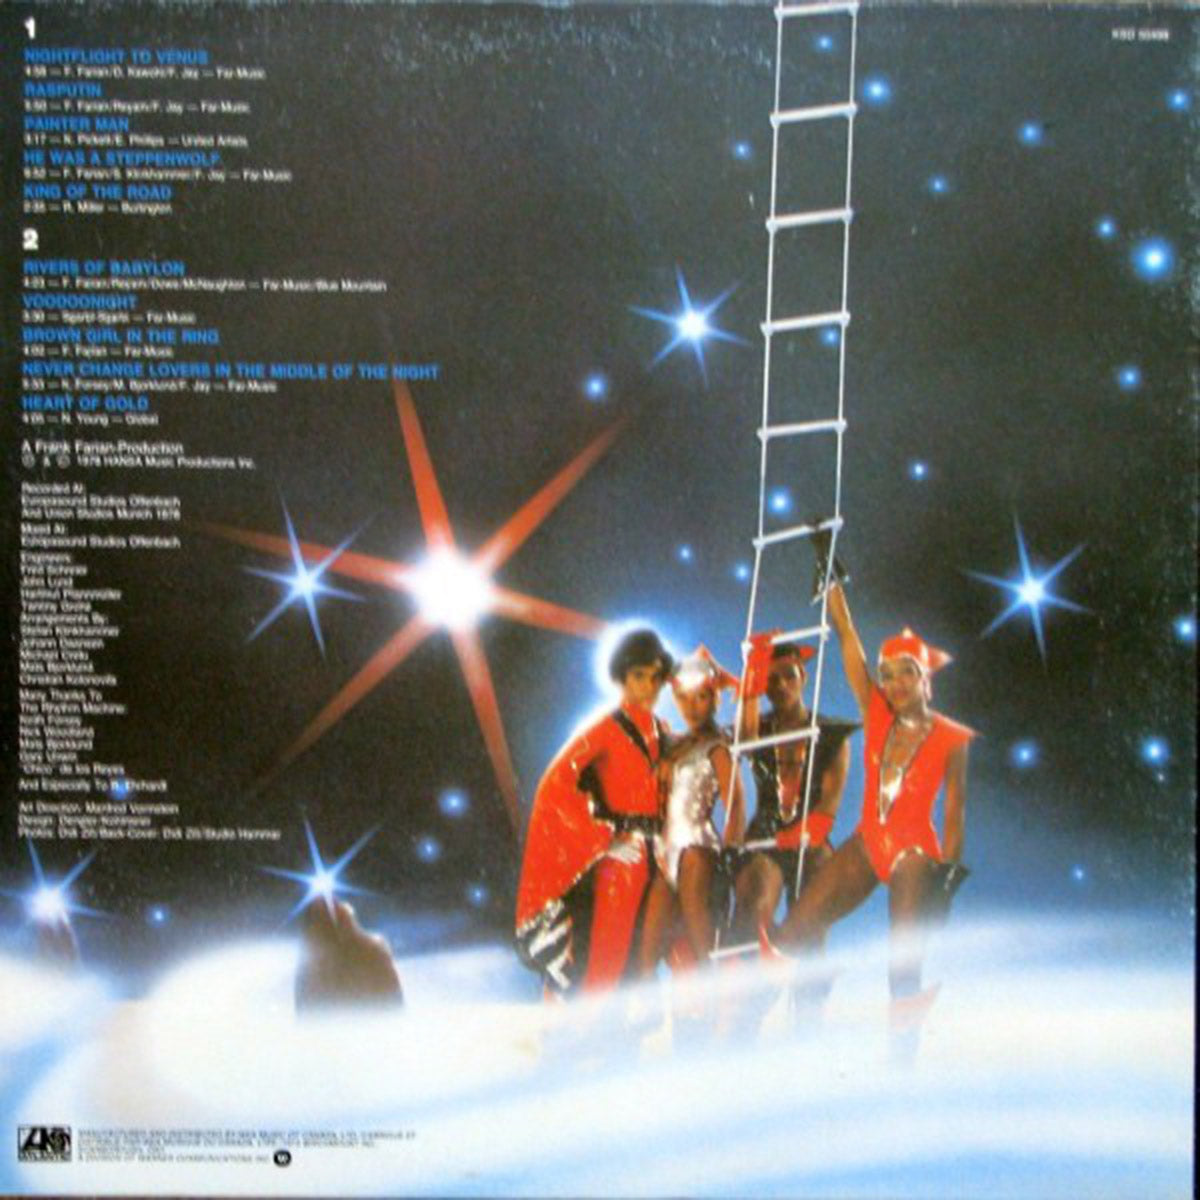 Boney M ‎– Nightflight To Venus - 1978 Original!